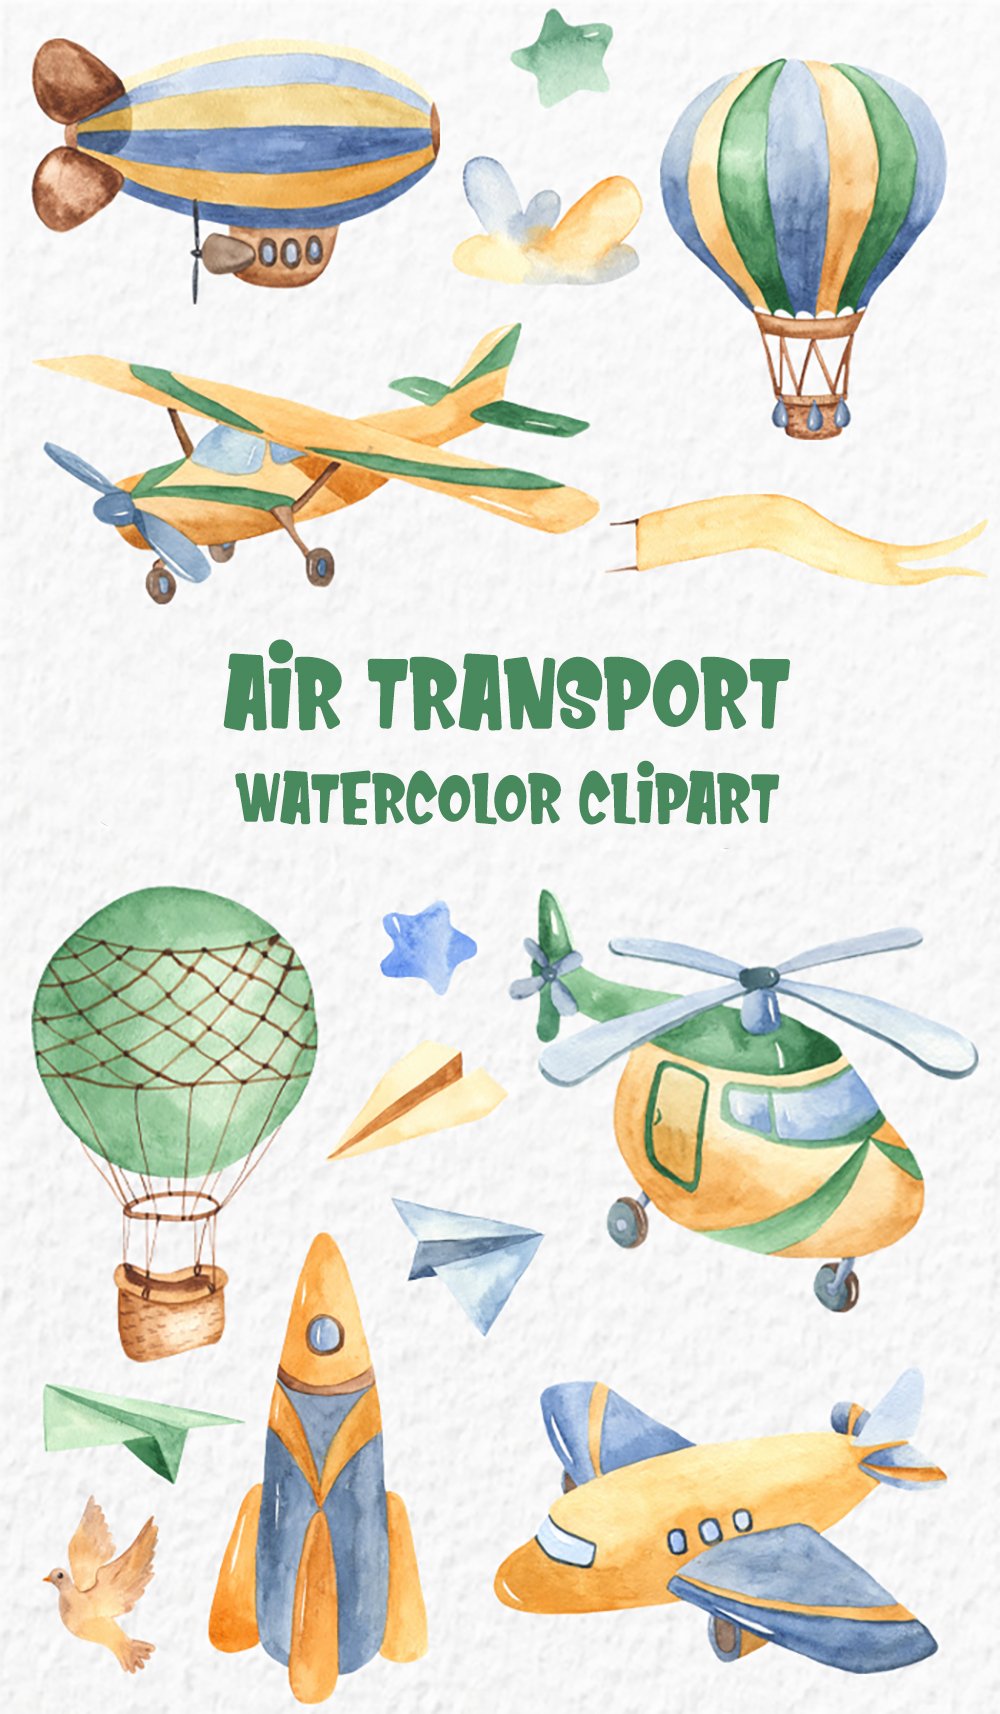 Image of vintage air transport.